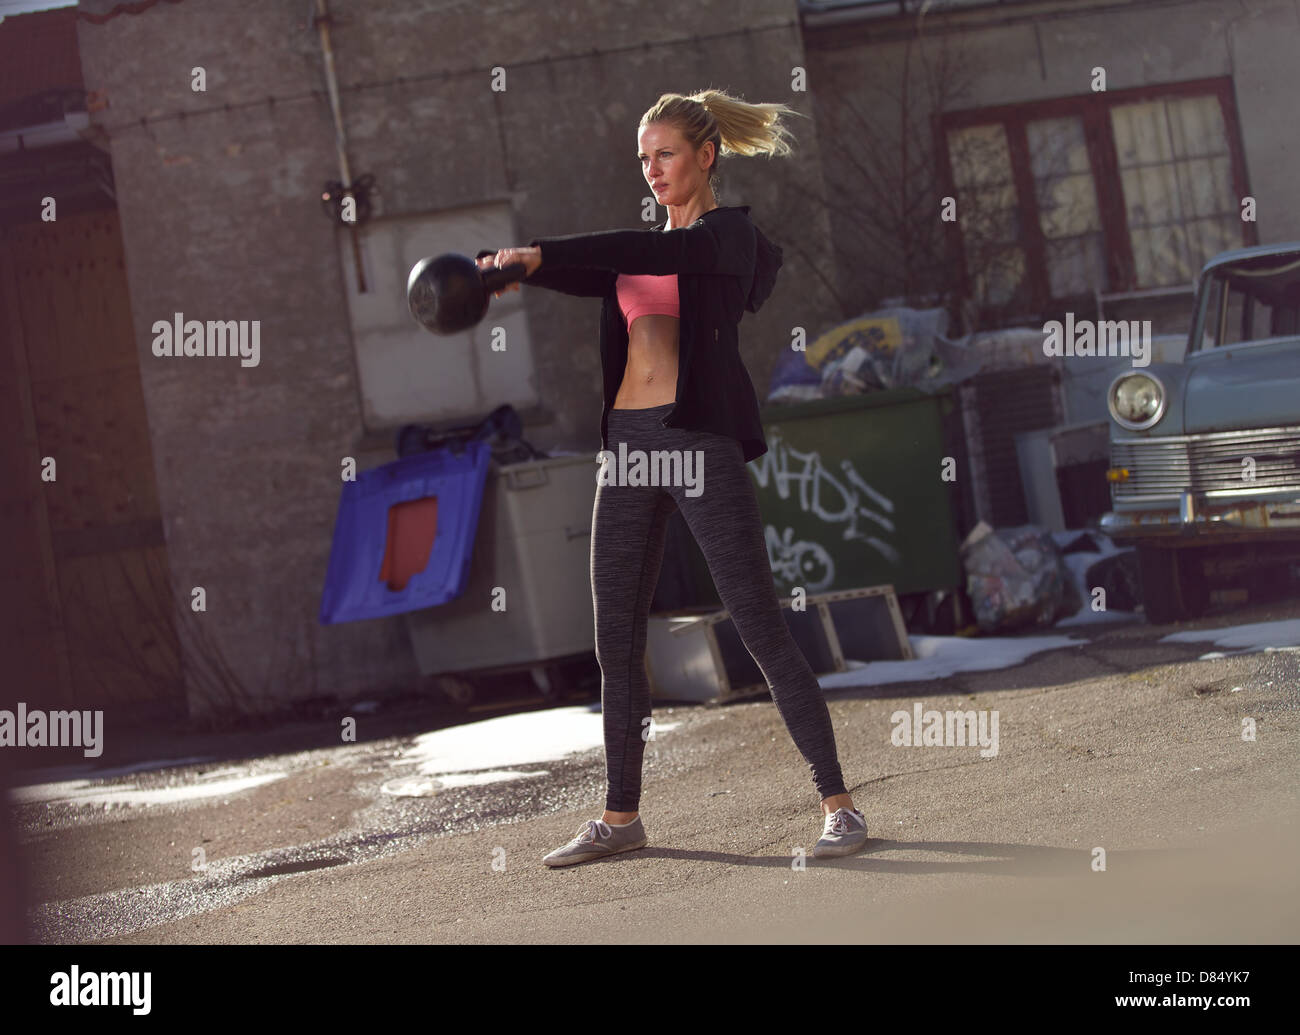 Junge Fitness Frau schwingen die Kettlebell beim Crossfit training Stockfoto